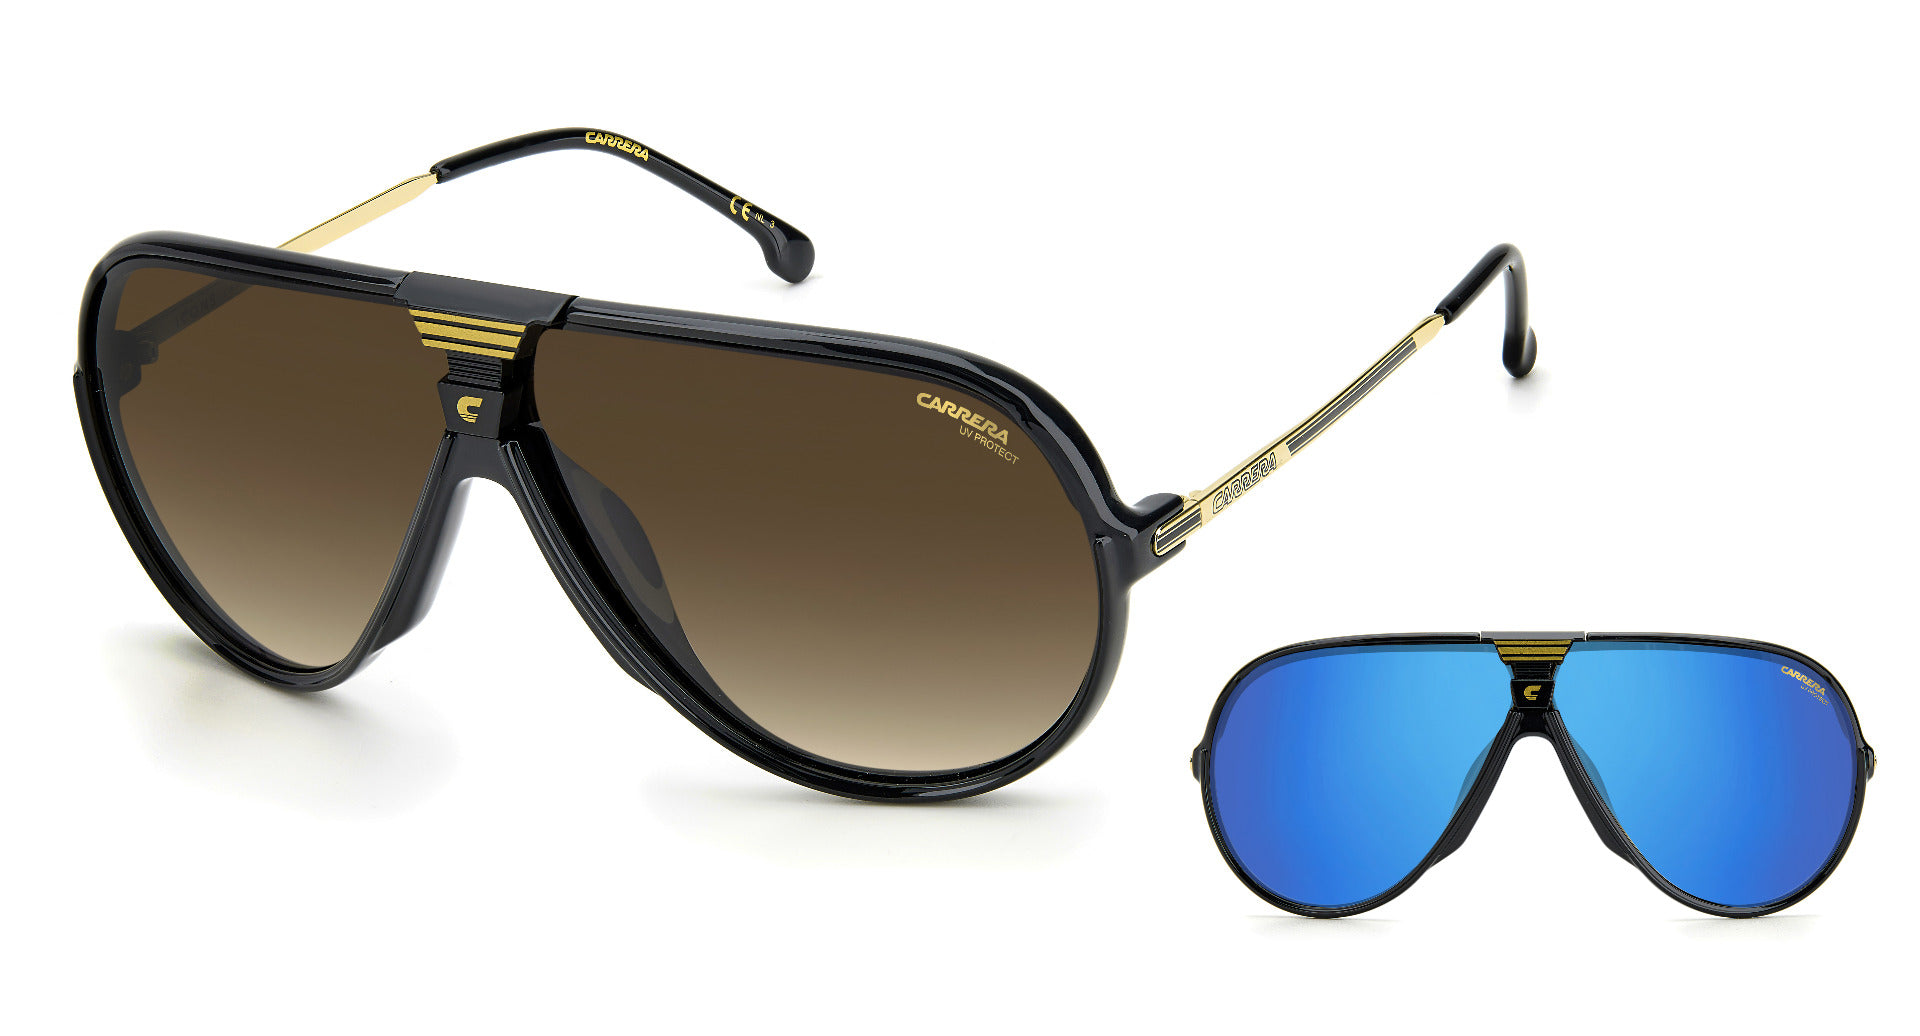 Carrera CHANGER 65 Aviator Sunglasses | Fashion Eyewear